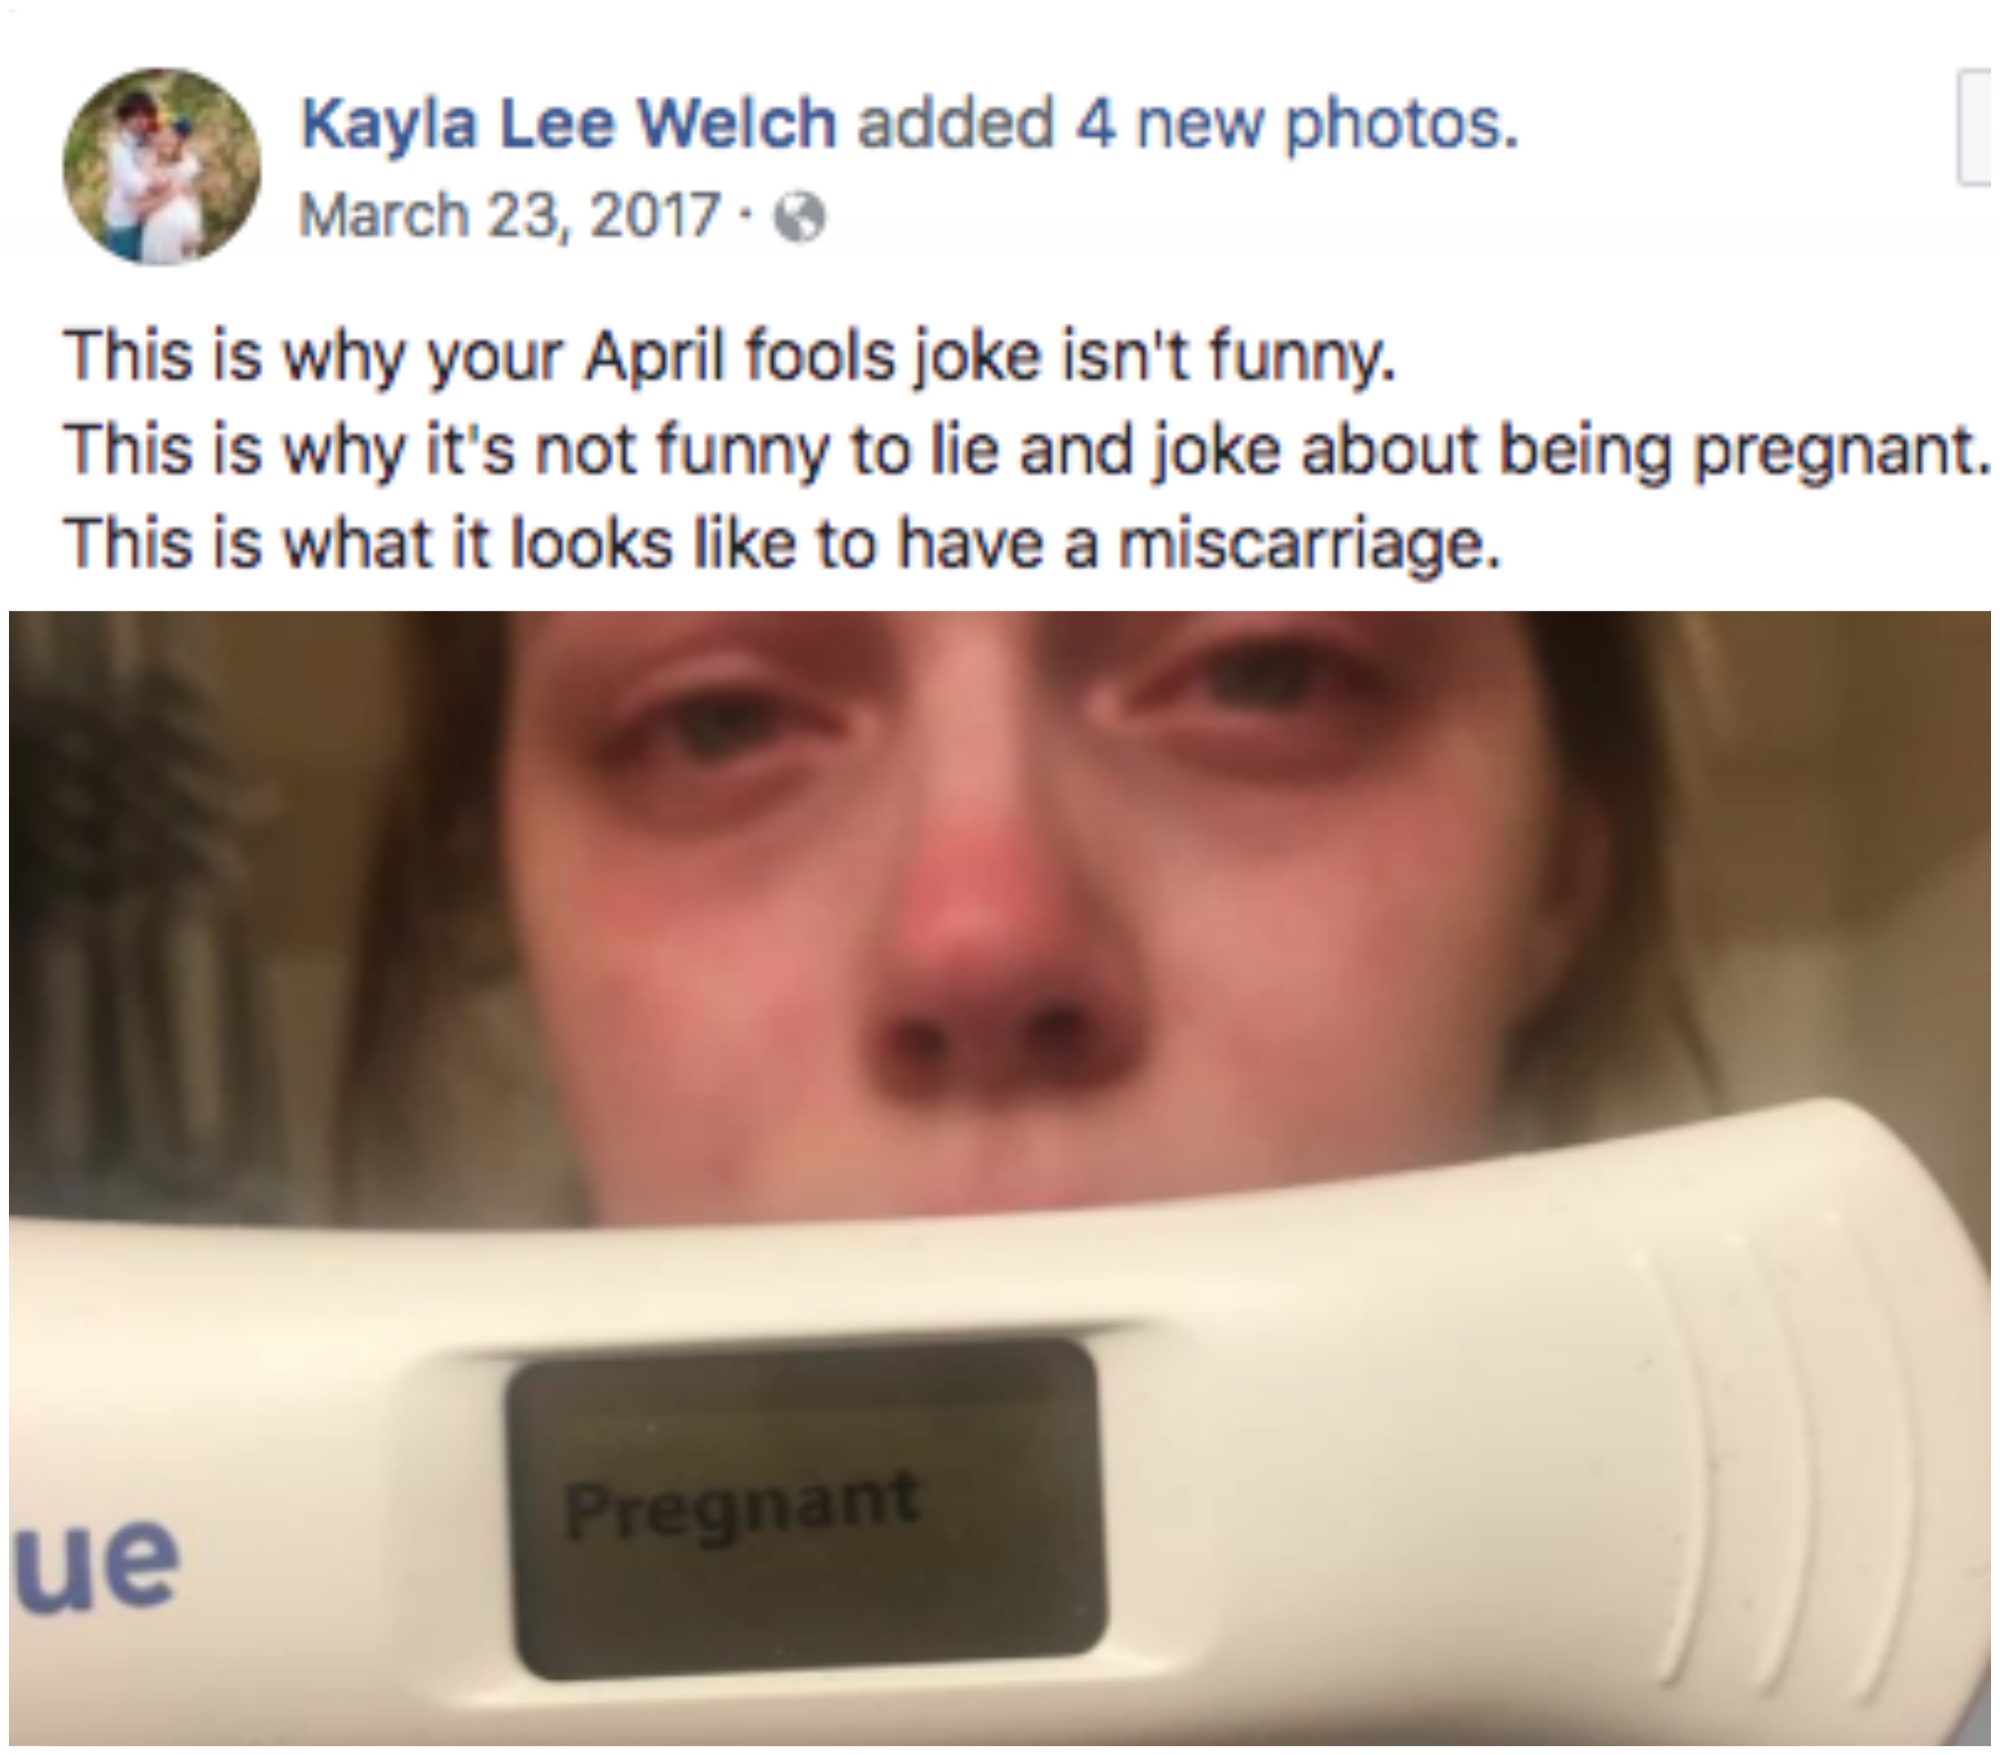 Postive Pregnancy Test Joke April Fools Day Prank Honey Trap 